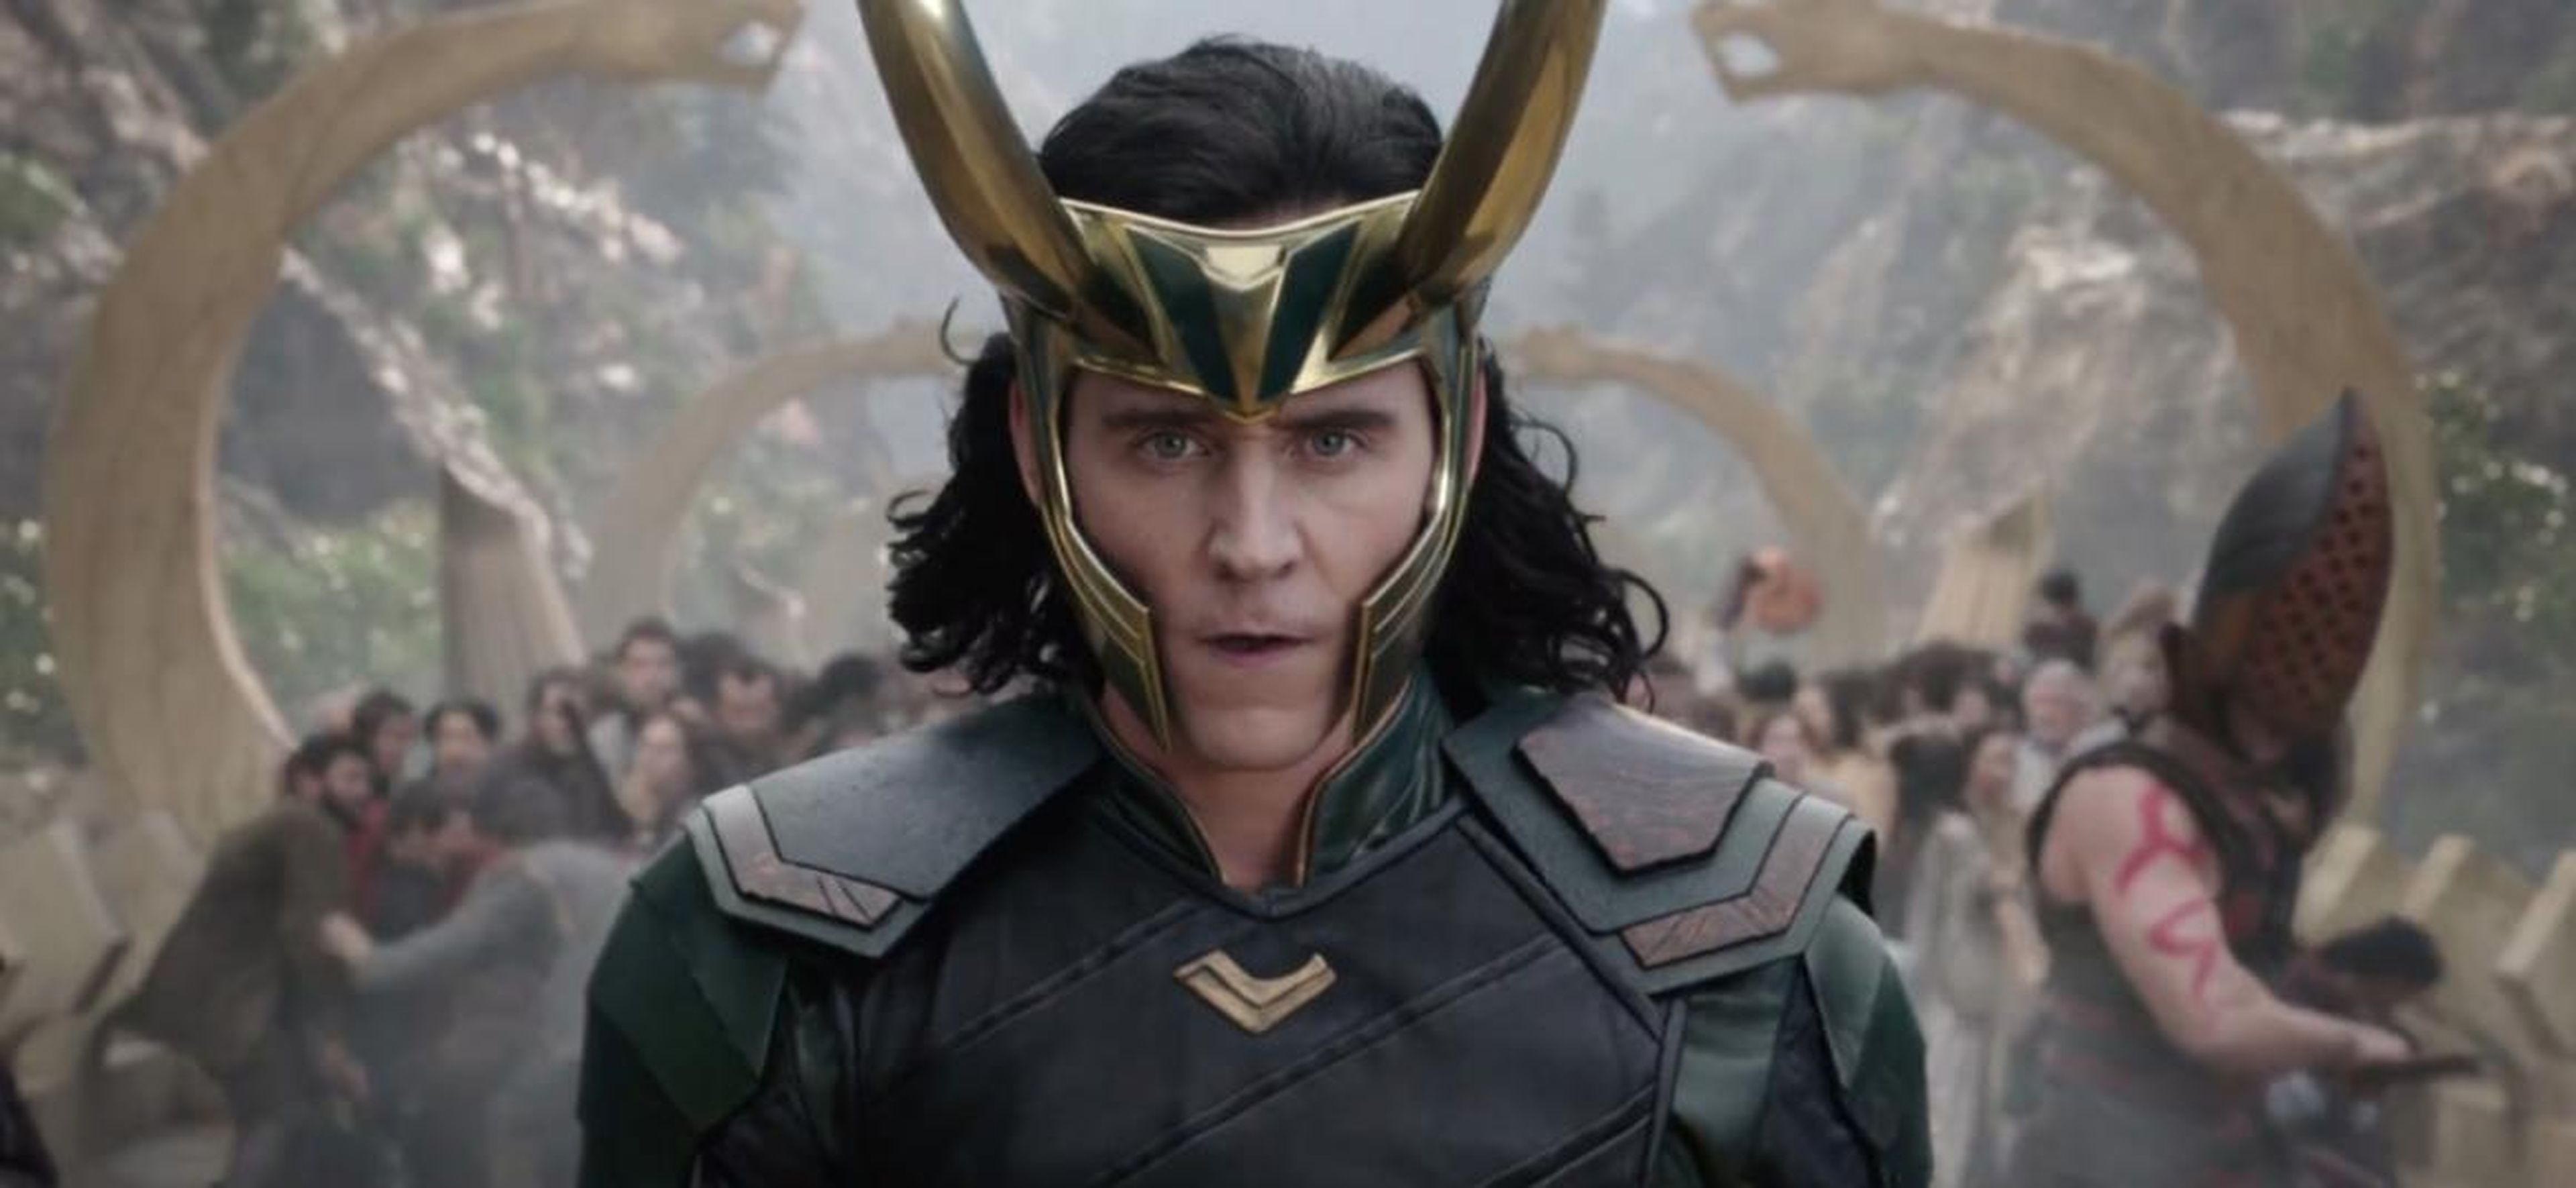 15. Tom Hiddleston as Loki in "Thor: Ragnarok" (2017)